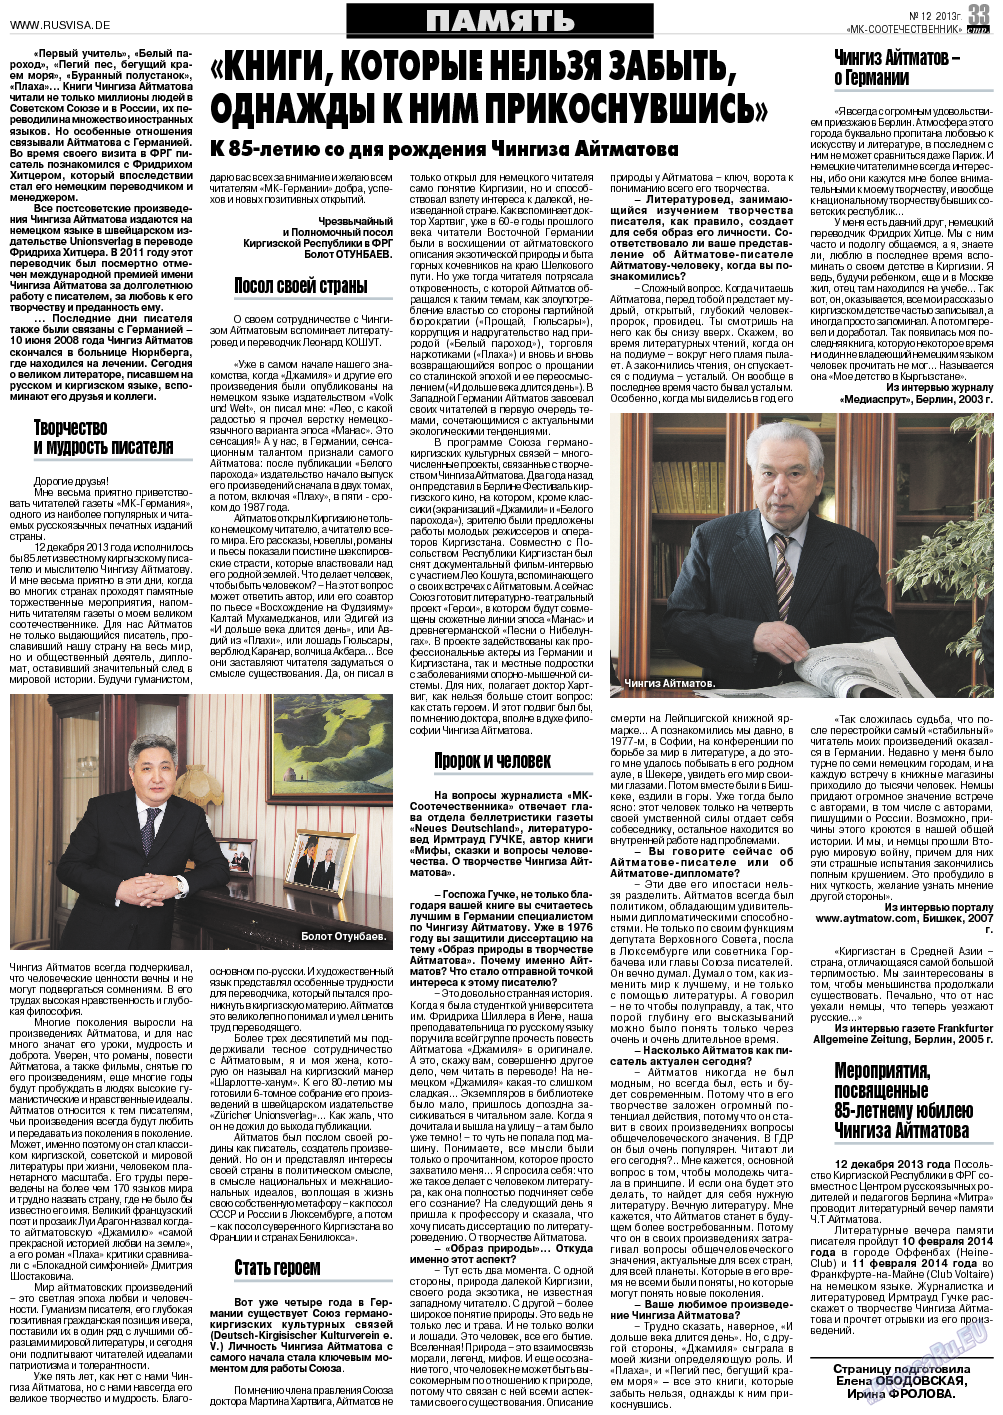 МК-Германия планета мнений (газета). 2013 год, номер 12, стр. 33